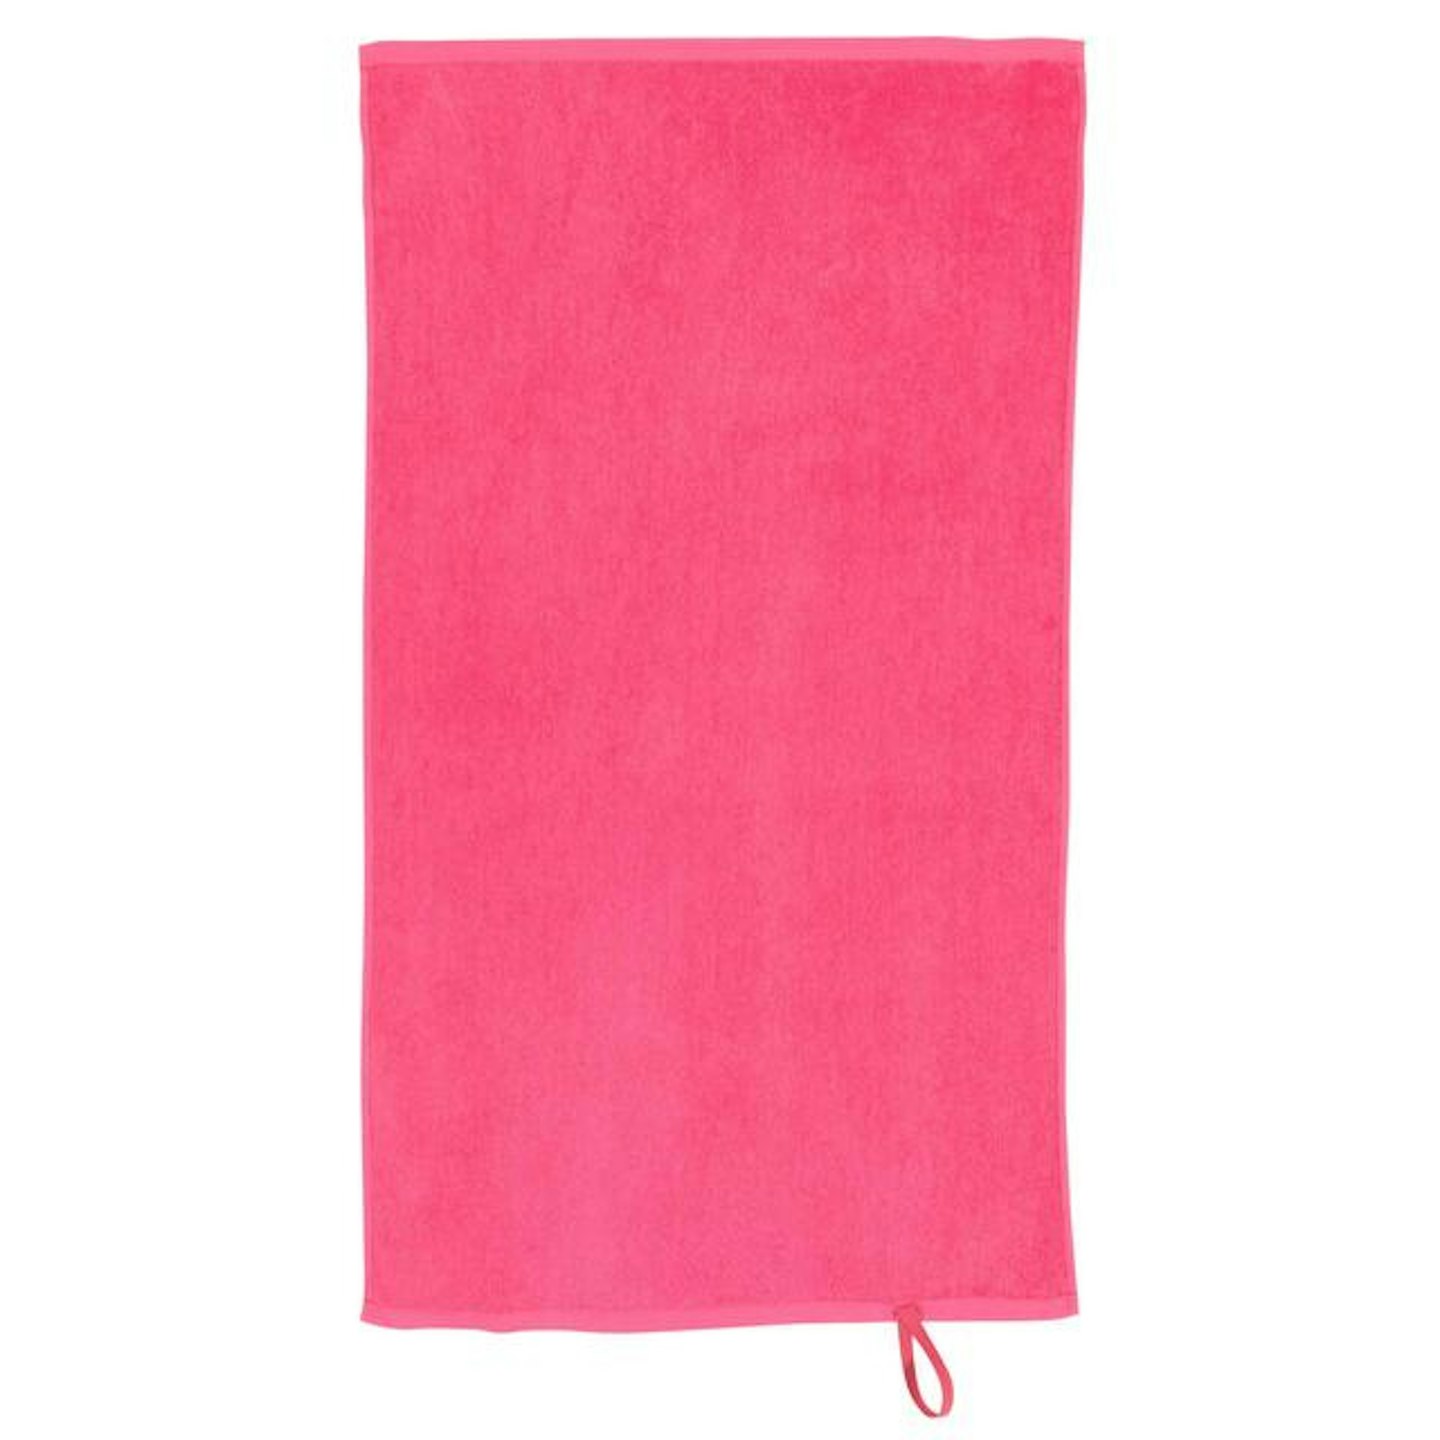 Domyos fitness towel pink